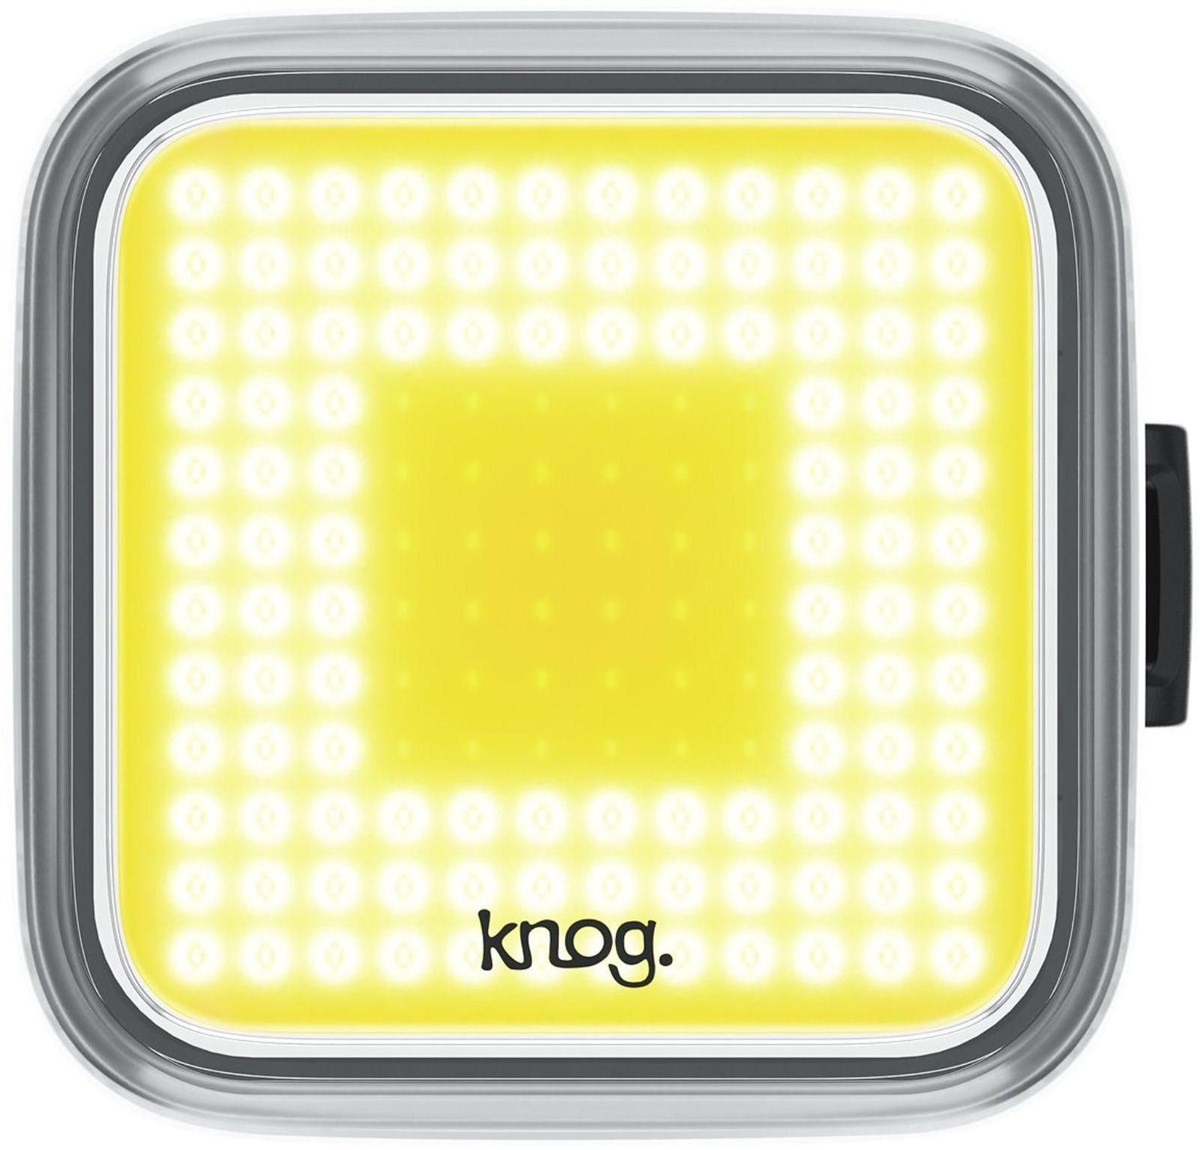 Knog Blinder Square USB Rechargeable Front Light product image